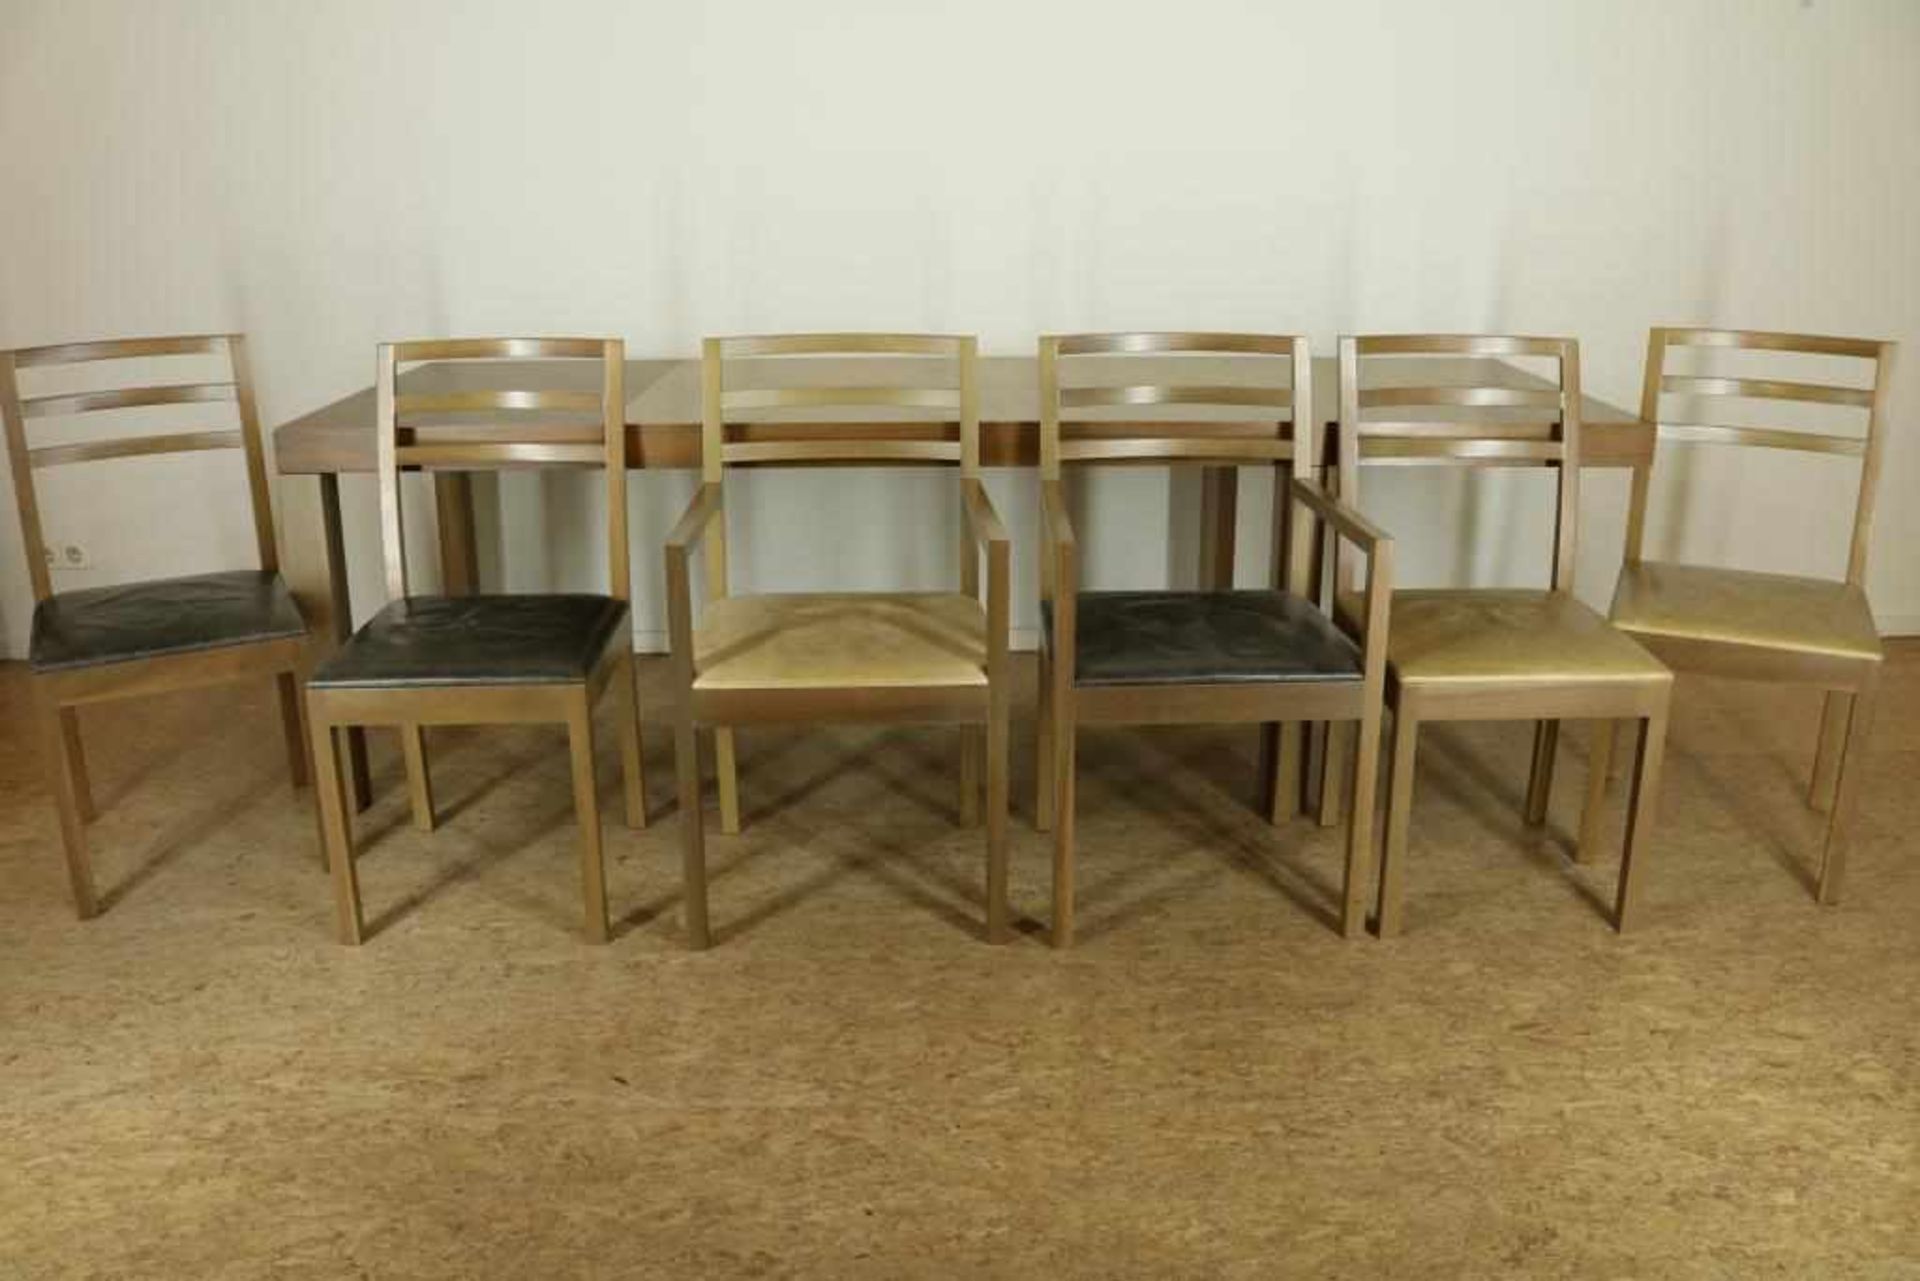 Series of 6 oak Neue Wiener Werkstatte chairs and oak dining room table, h. 75, w.188, d. 90 cm